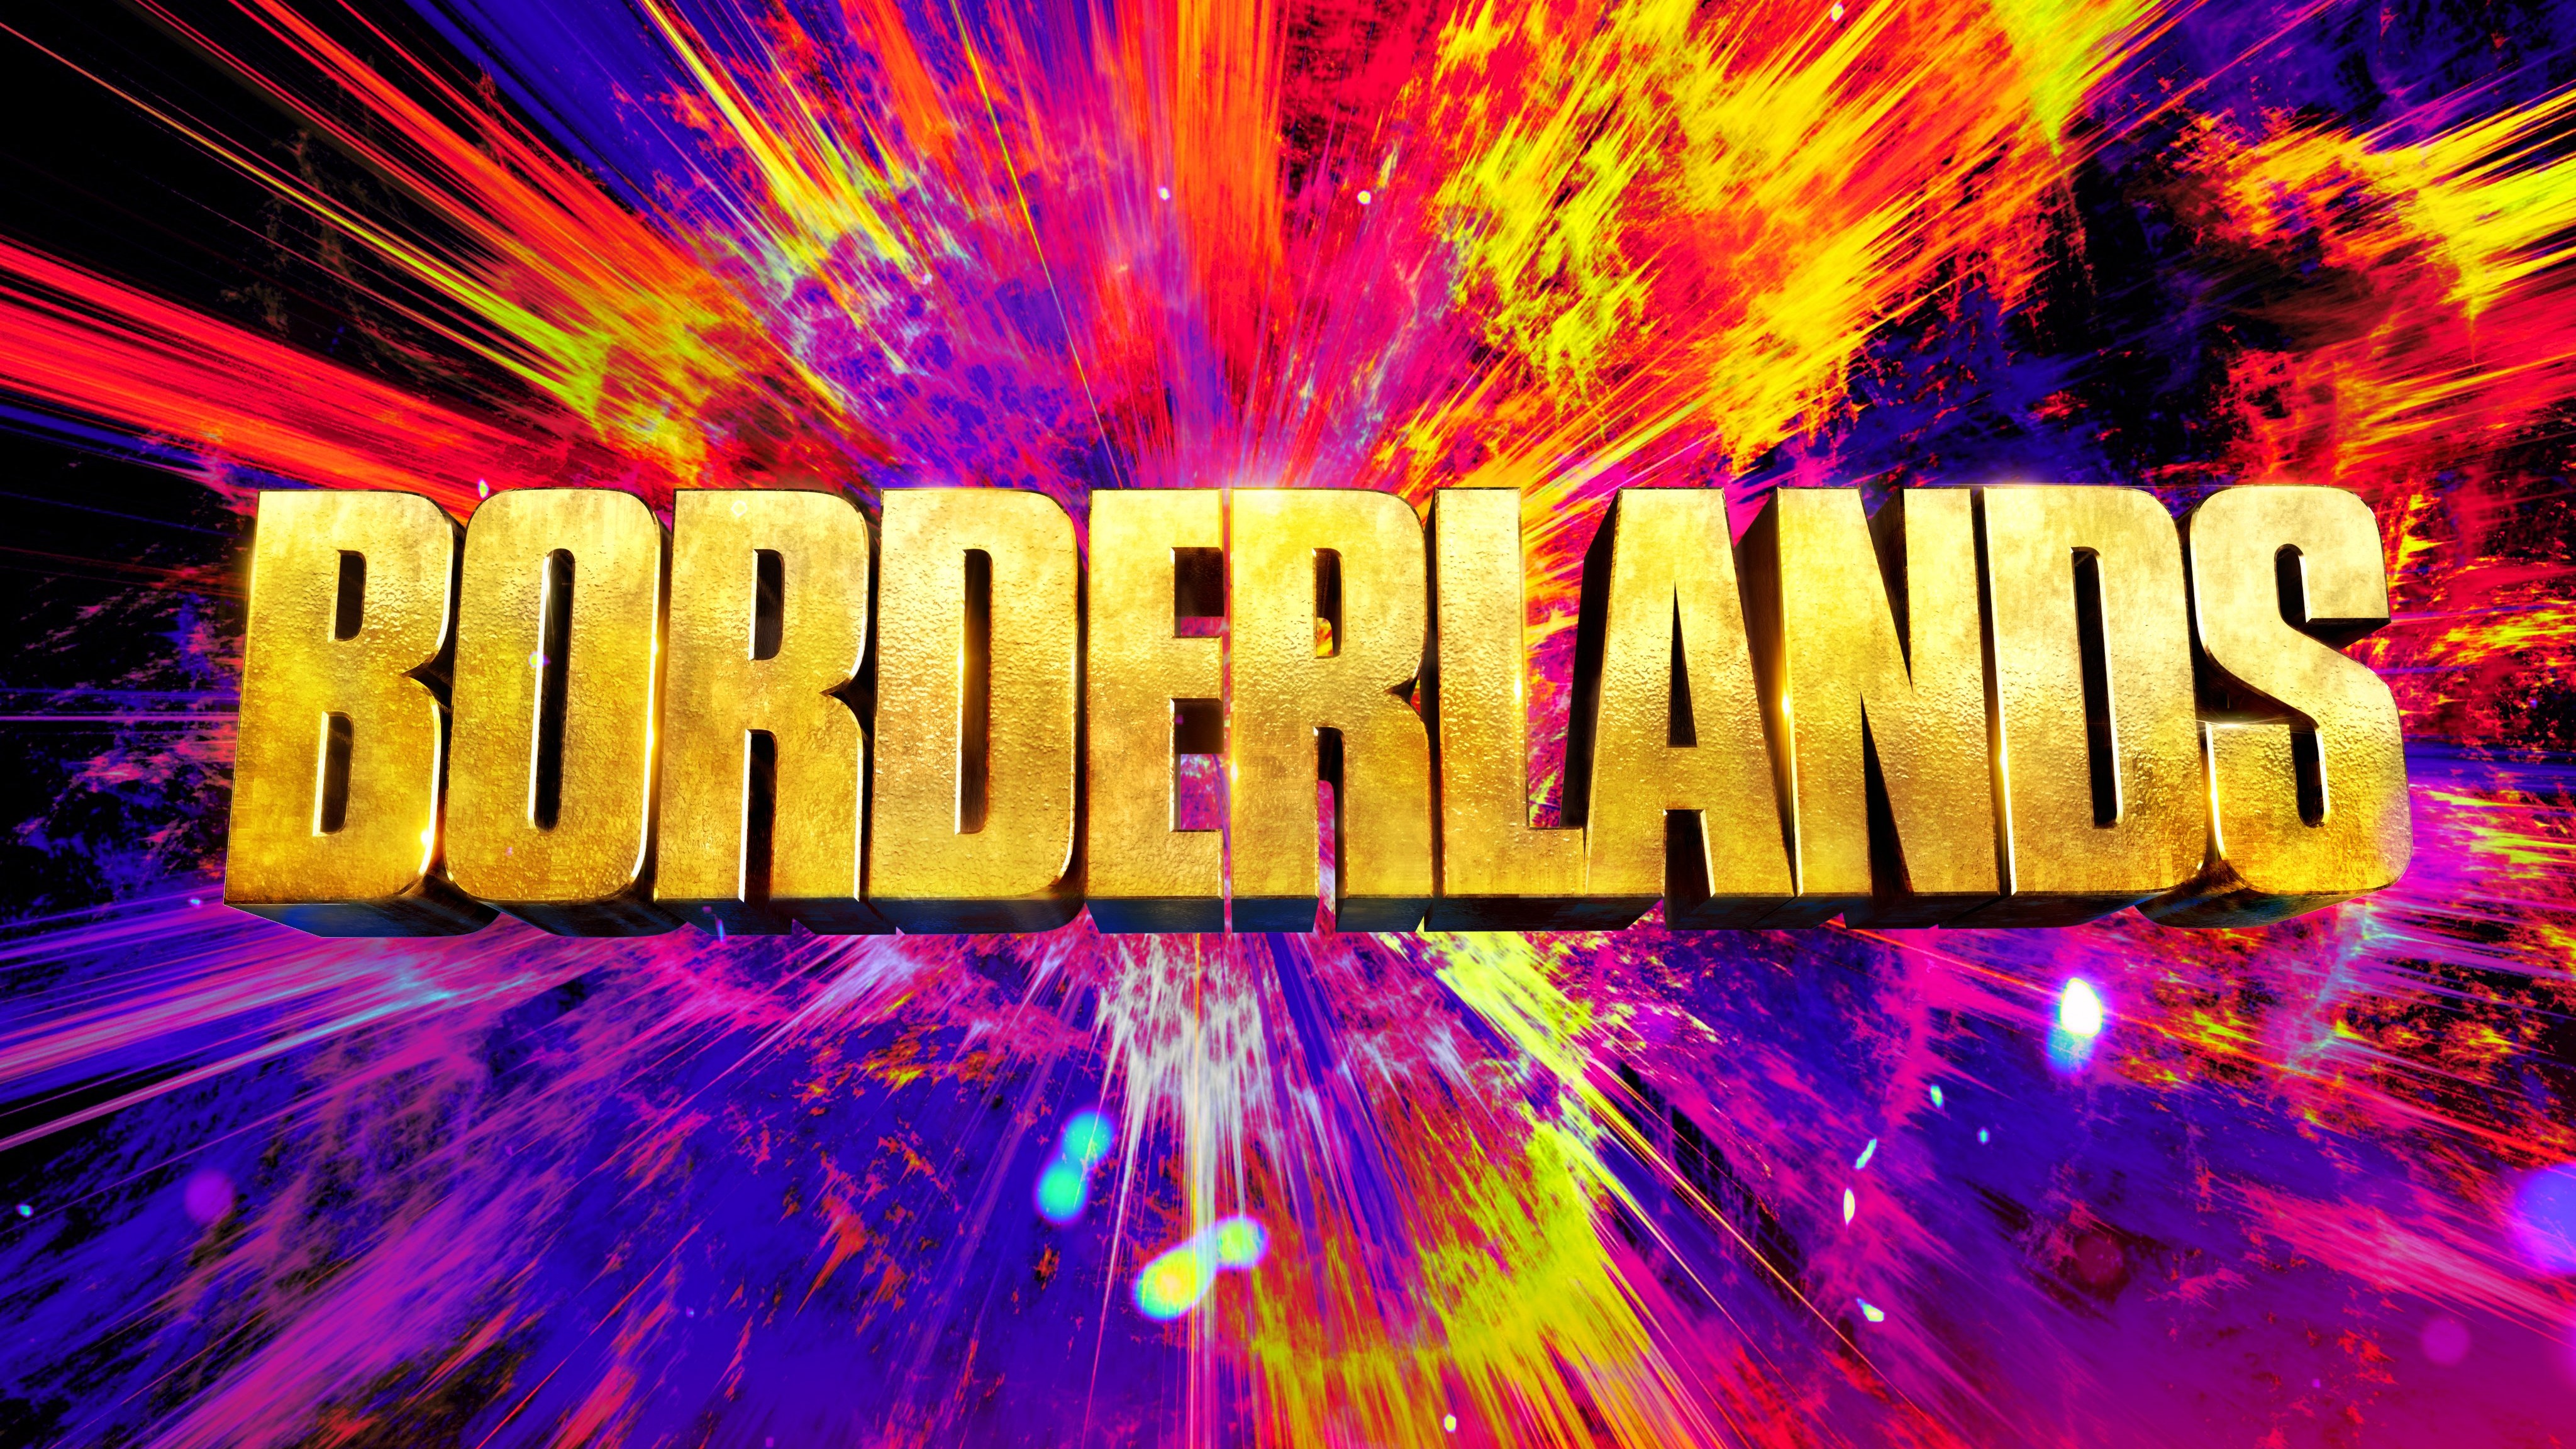 Borderlands Movie 2022 Wallpapers